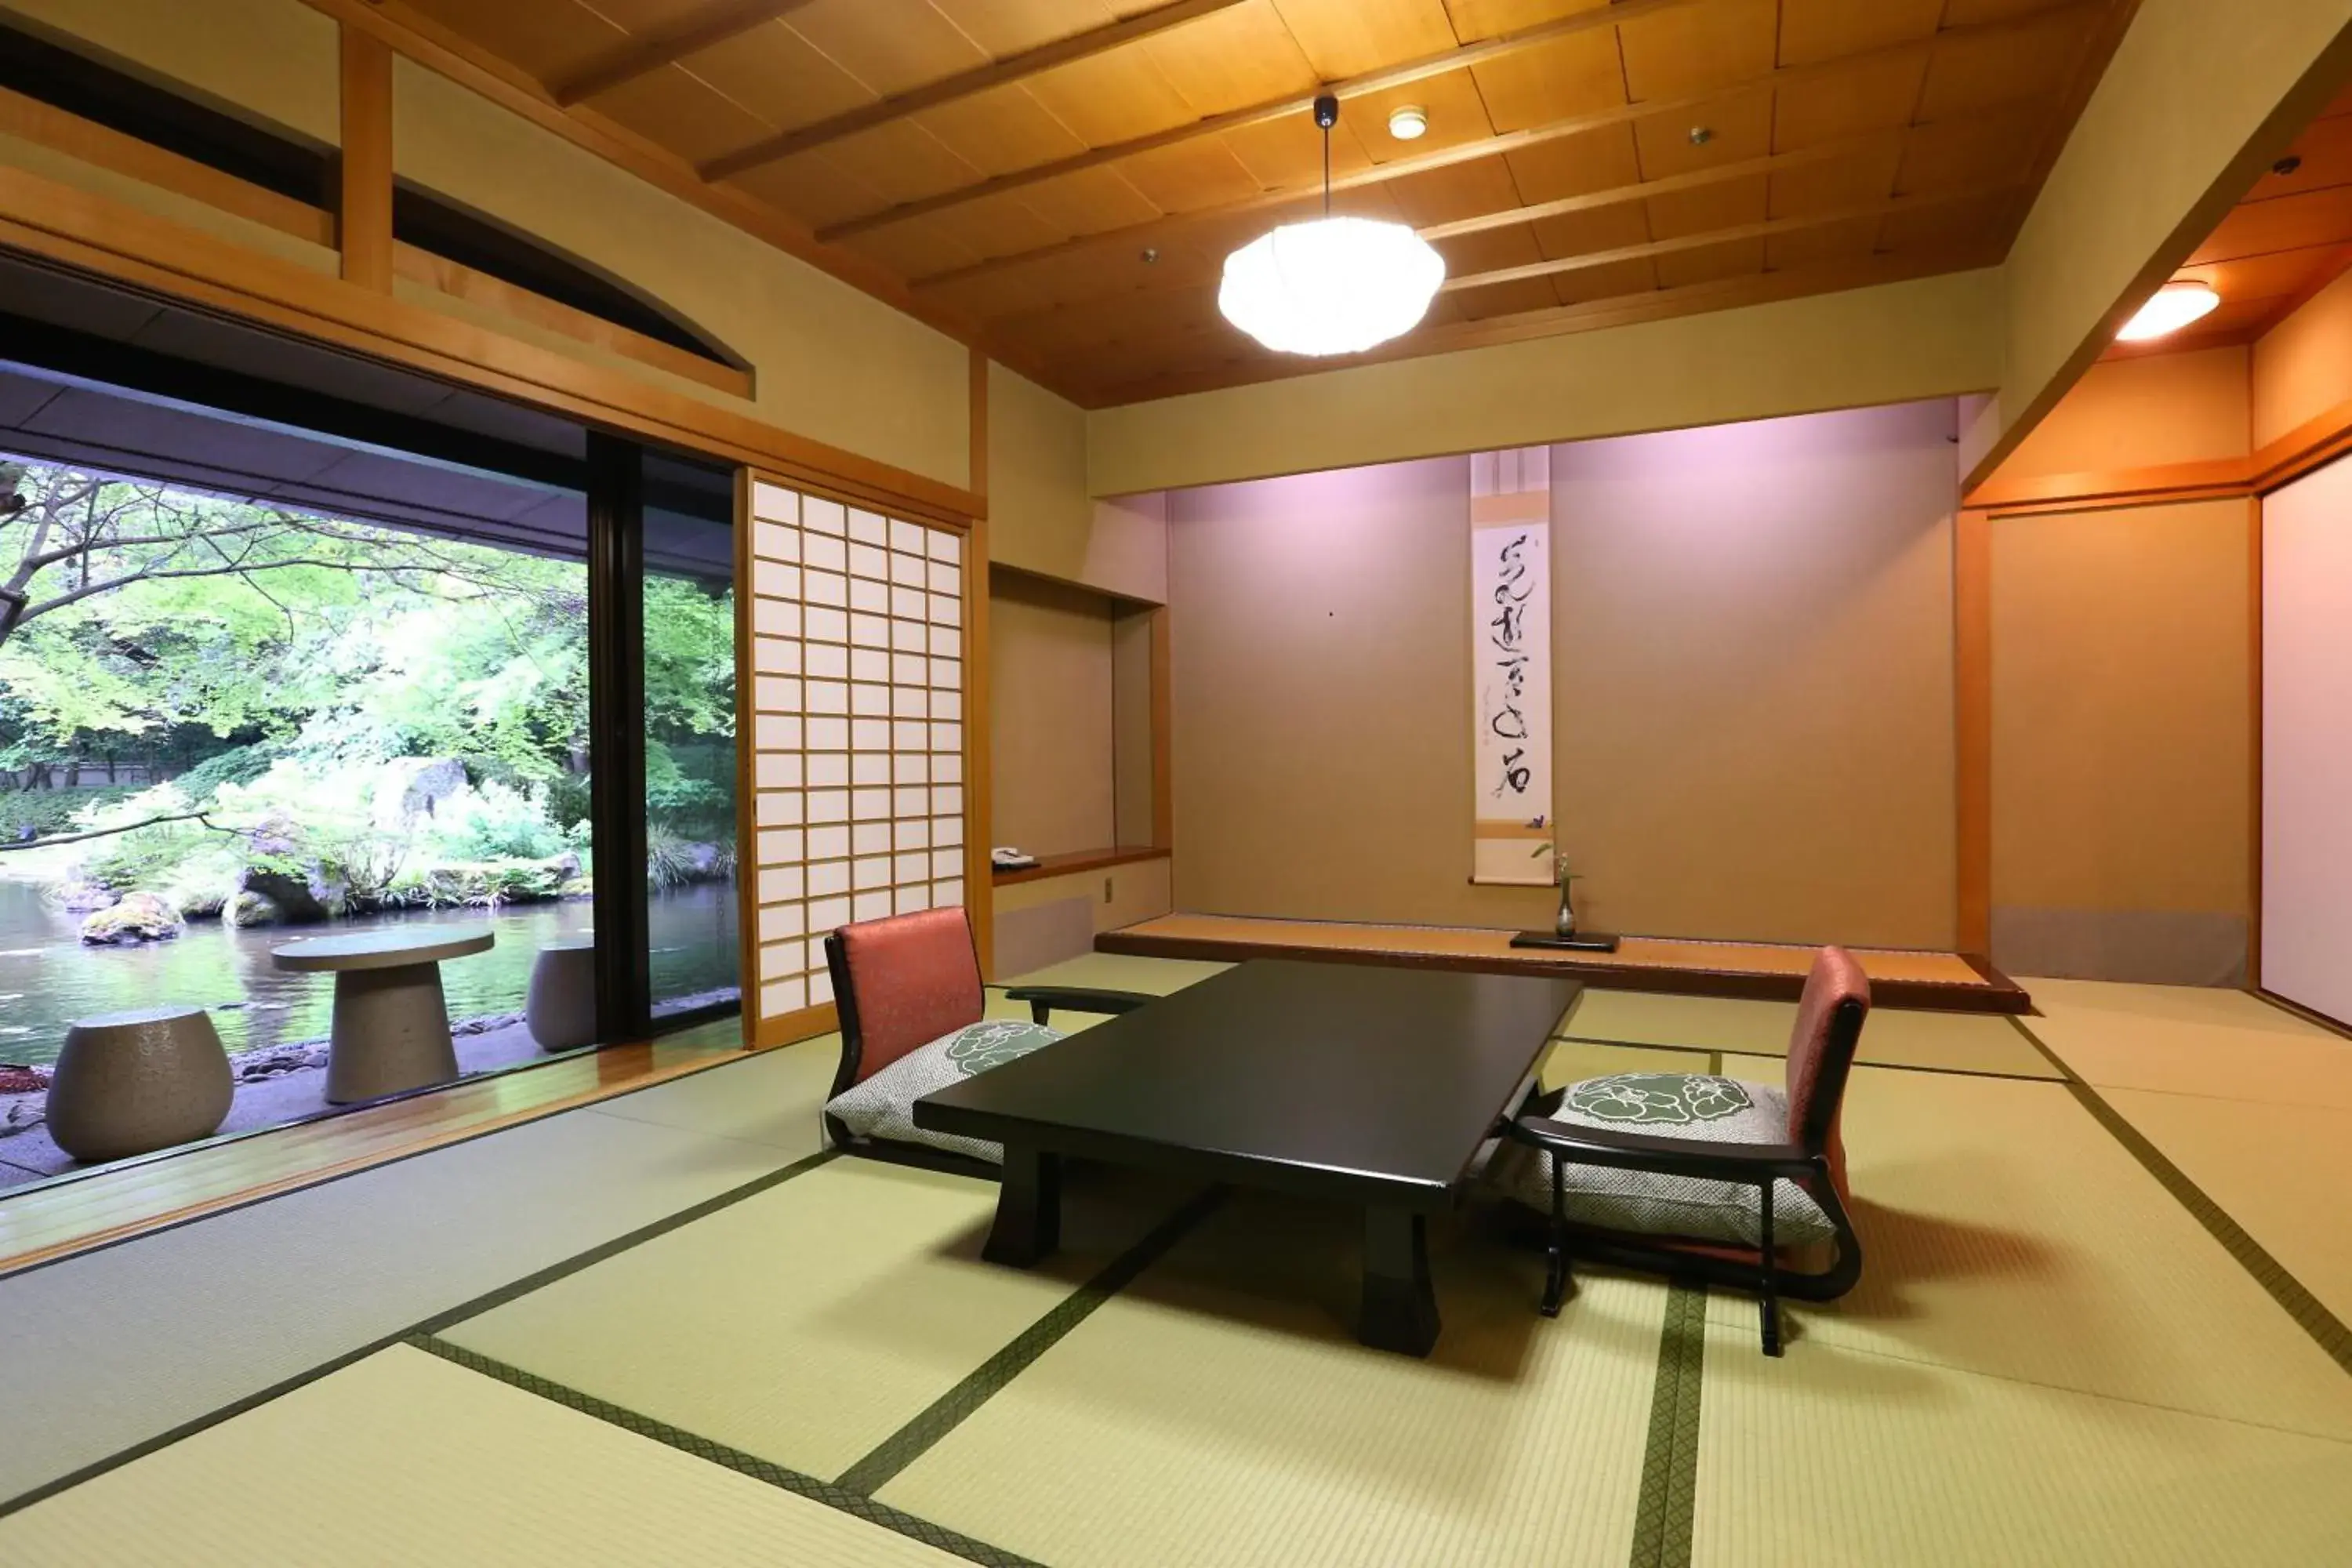 Photo of the whole room in Tsubaki